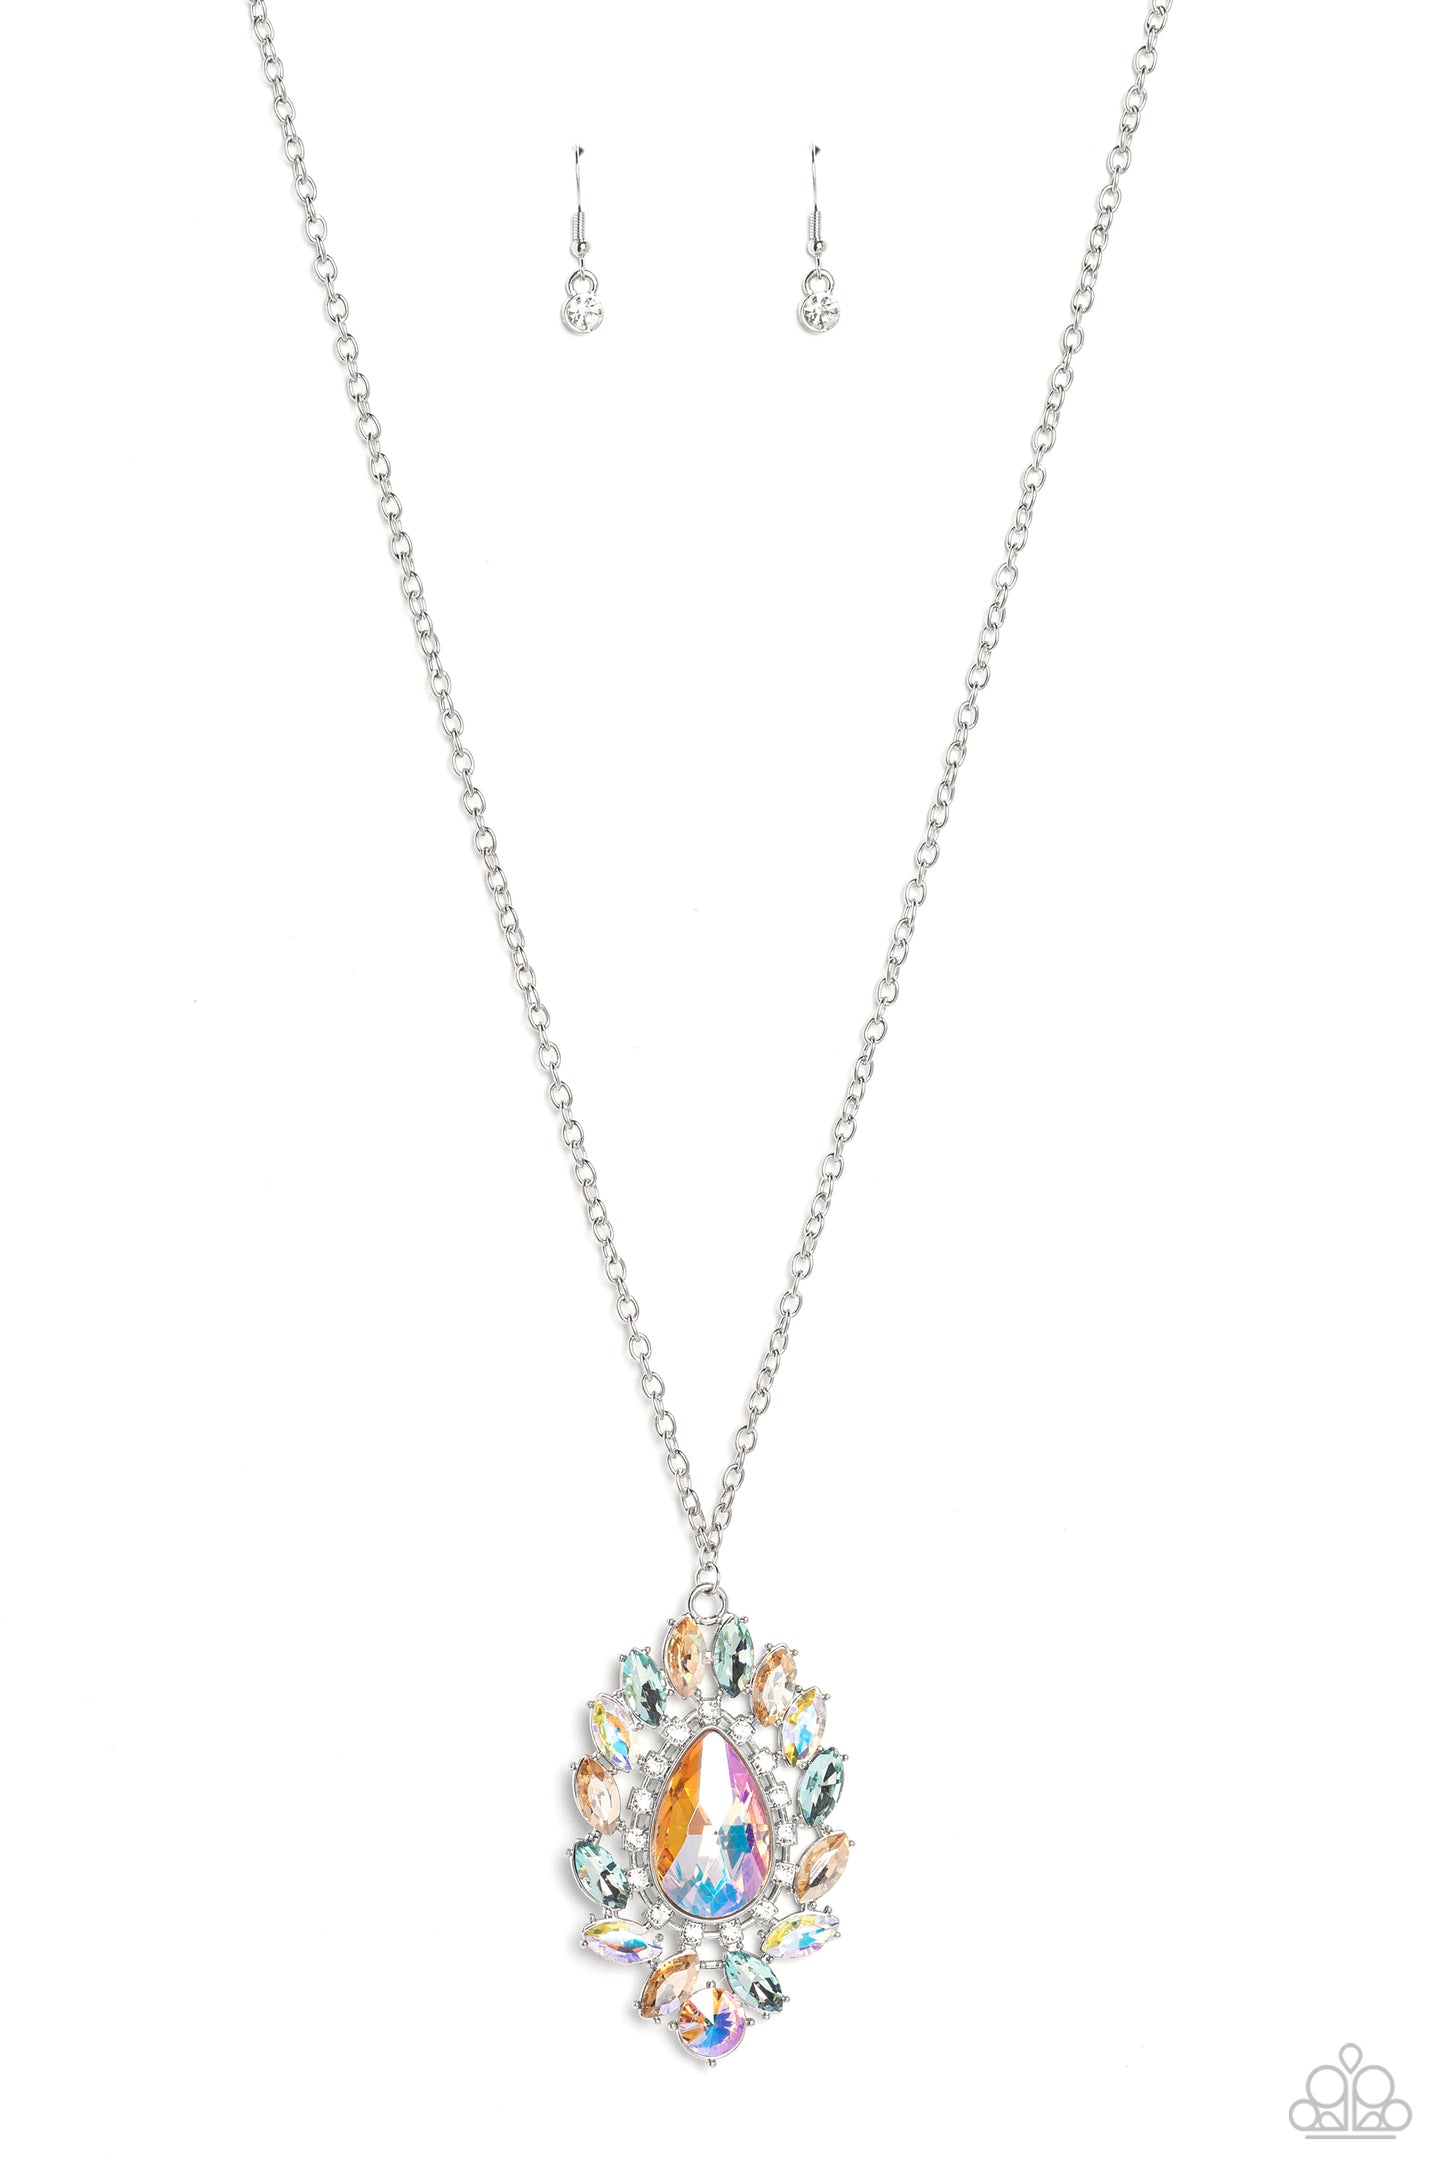 Statement Necklace - Paparazzi Over the TEARDROP - Multi Necklace Paparazzi jewelry image